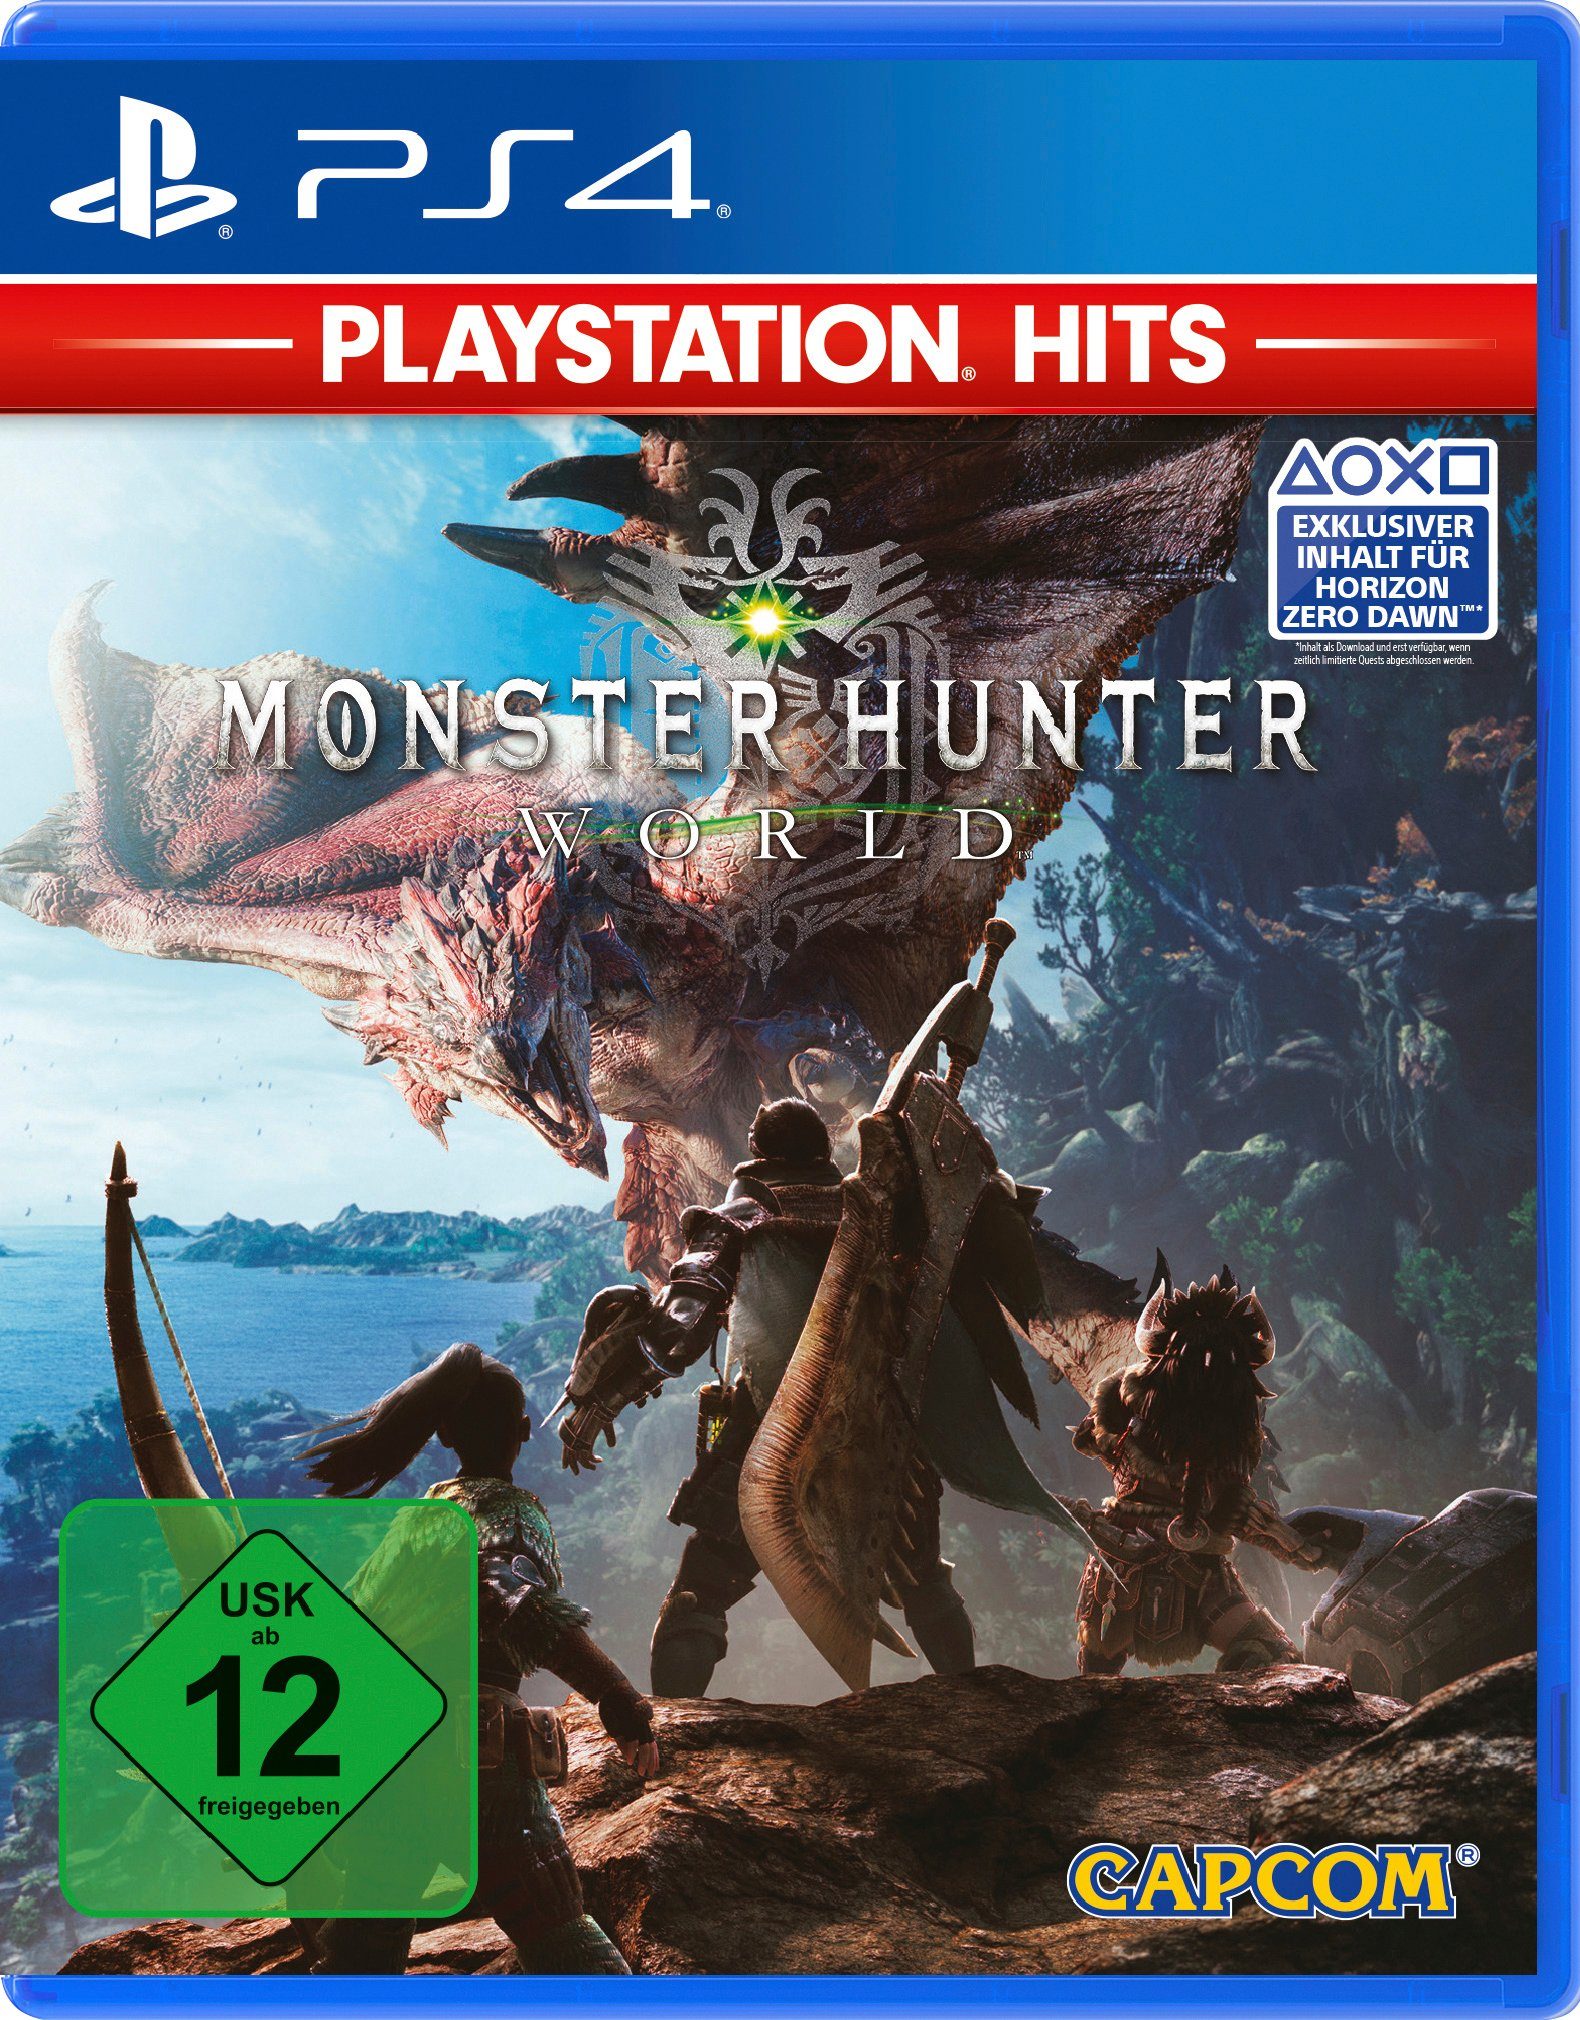 Capcom Monster Hunter: World 4 PlayStation PS Hits